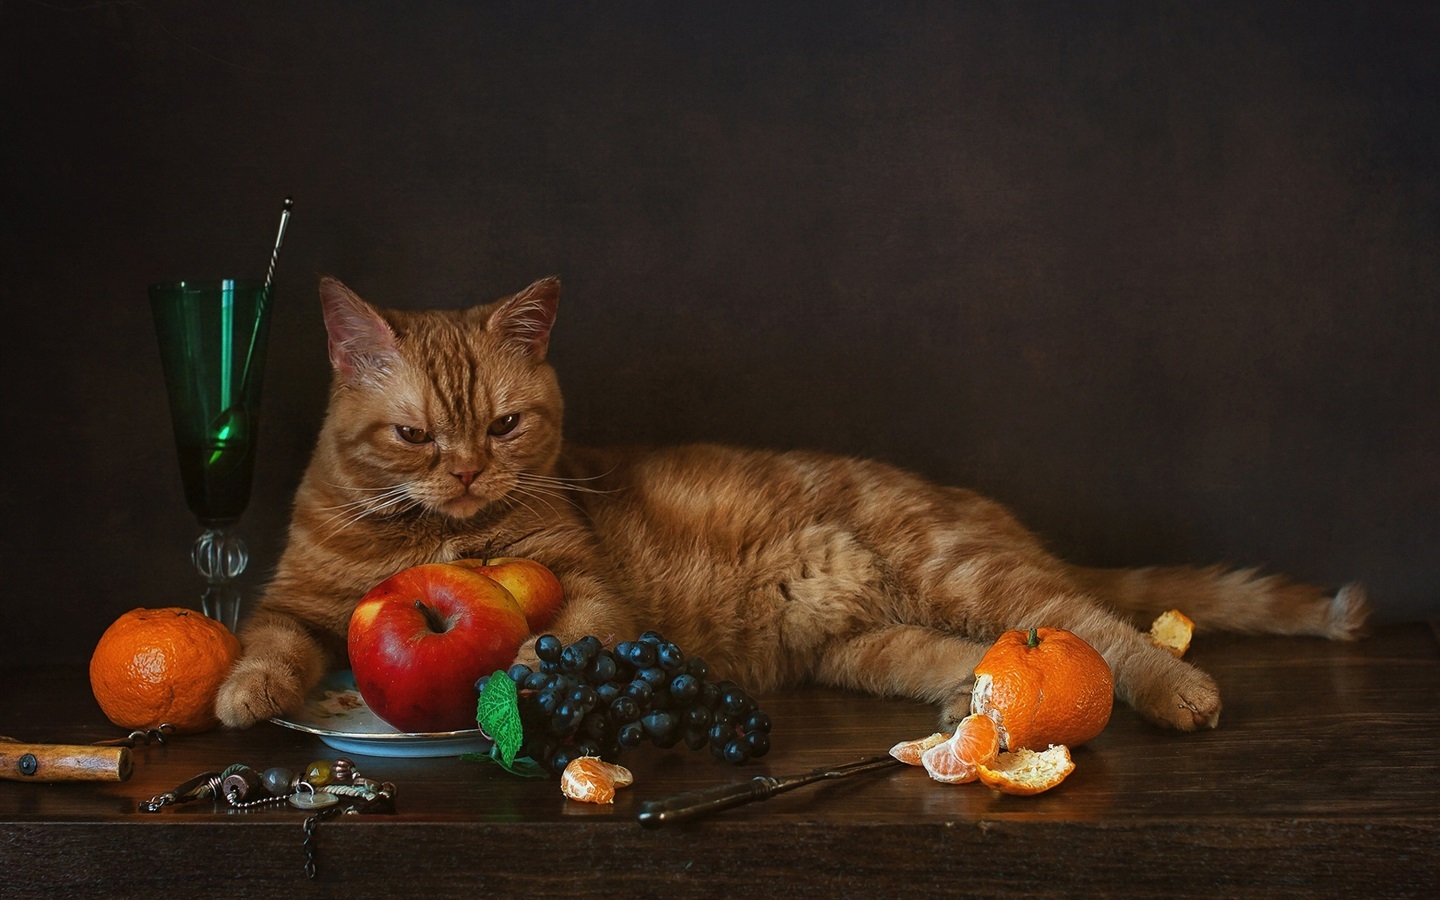 витамины коту, витамины кошке, какие витамины коту, какие витамины кошке, витамины котенку